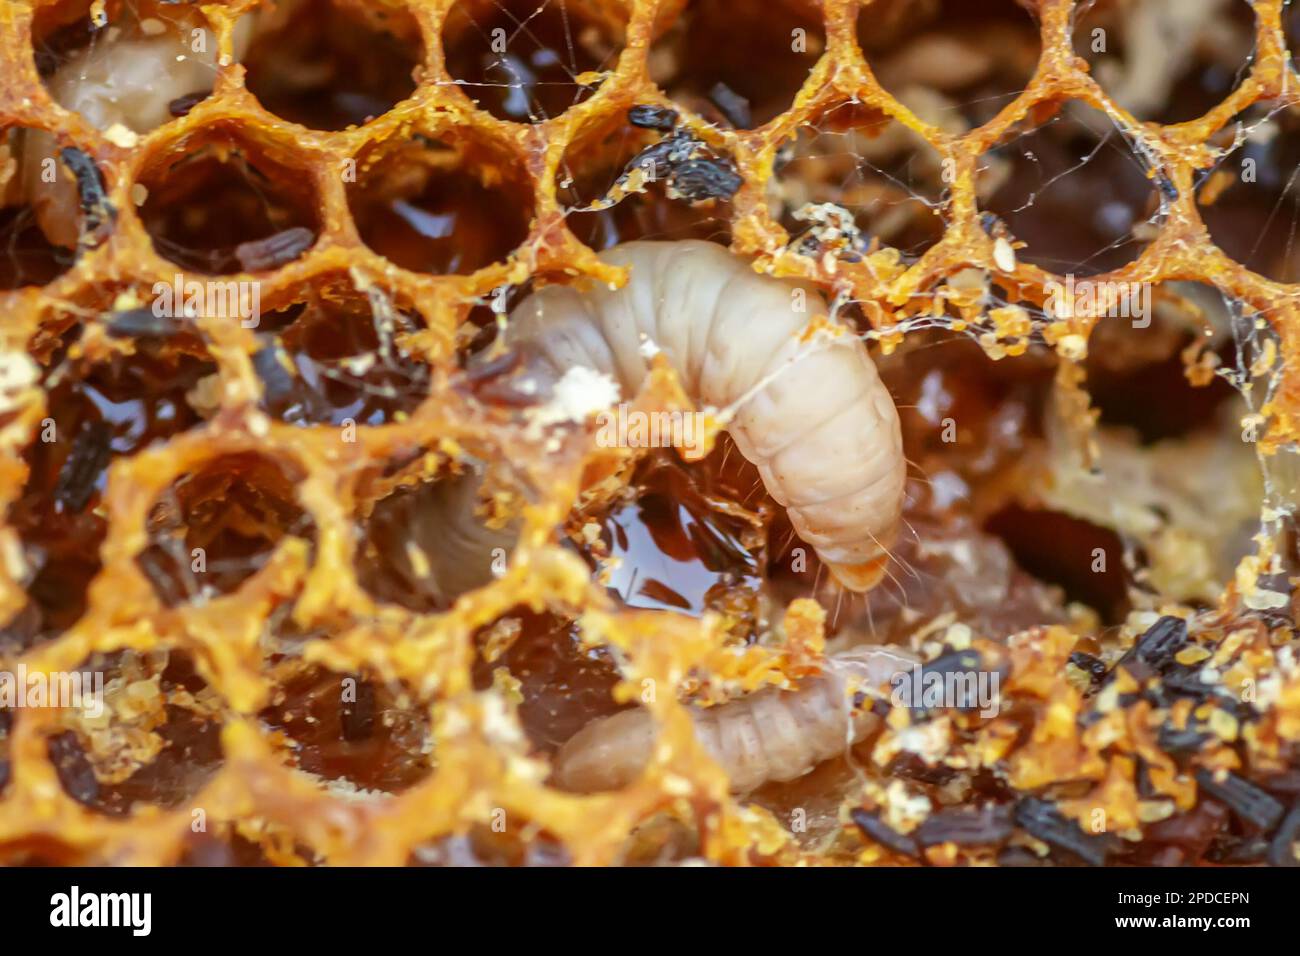 Waxworms, caterpillar larvae of wax moths, on damaged beeswax, frame with waxed wax moth. Stock Photo